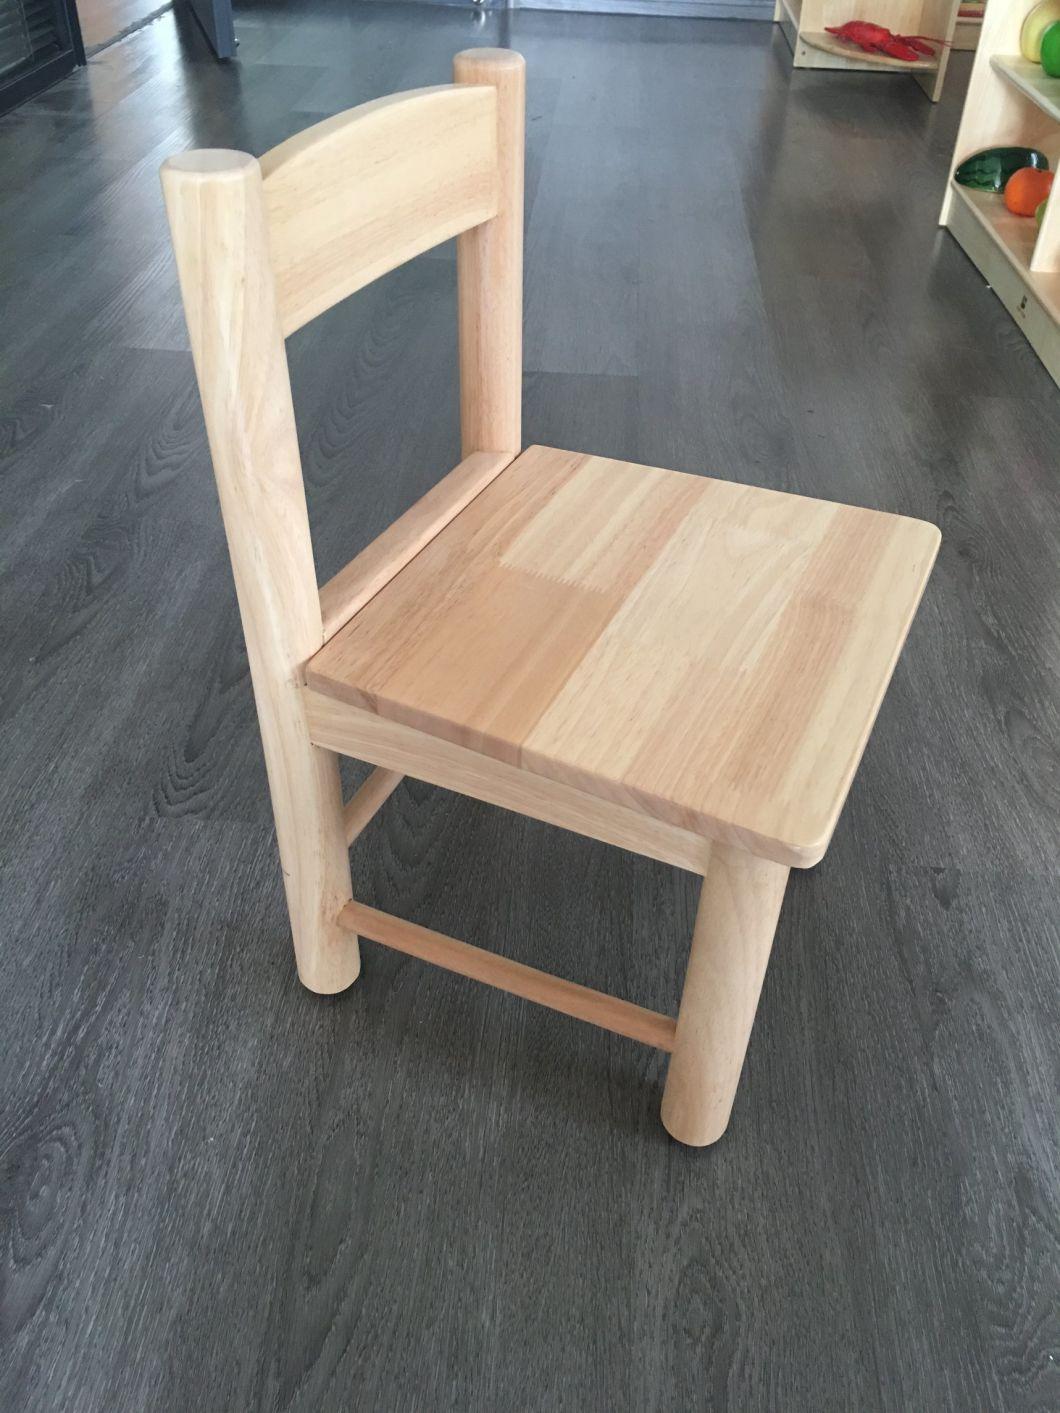 Kindergarten Kids Chair, Nursery School Classroom Table Chair, Preschool Furniture, Student Stack-Able Wooden Stack Chair